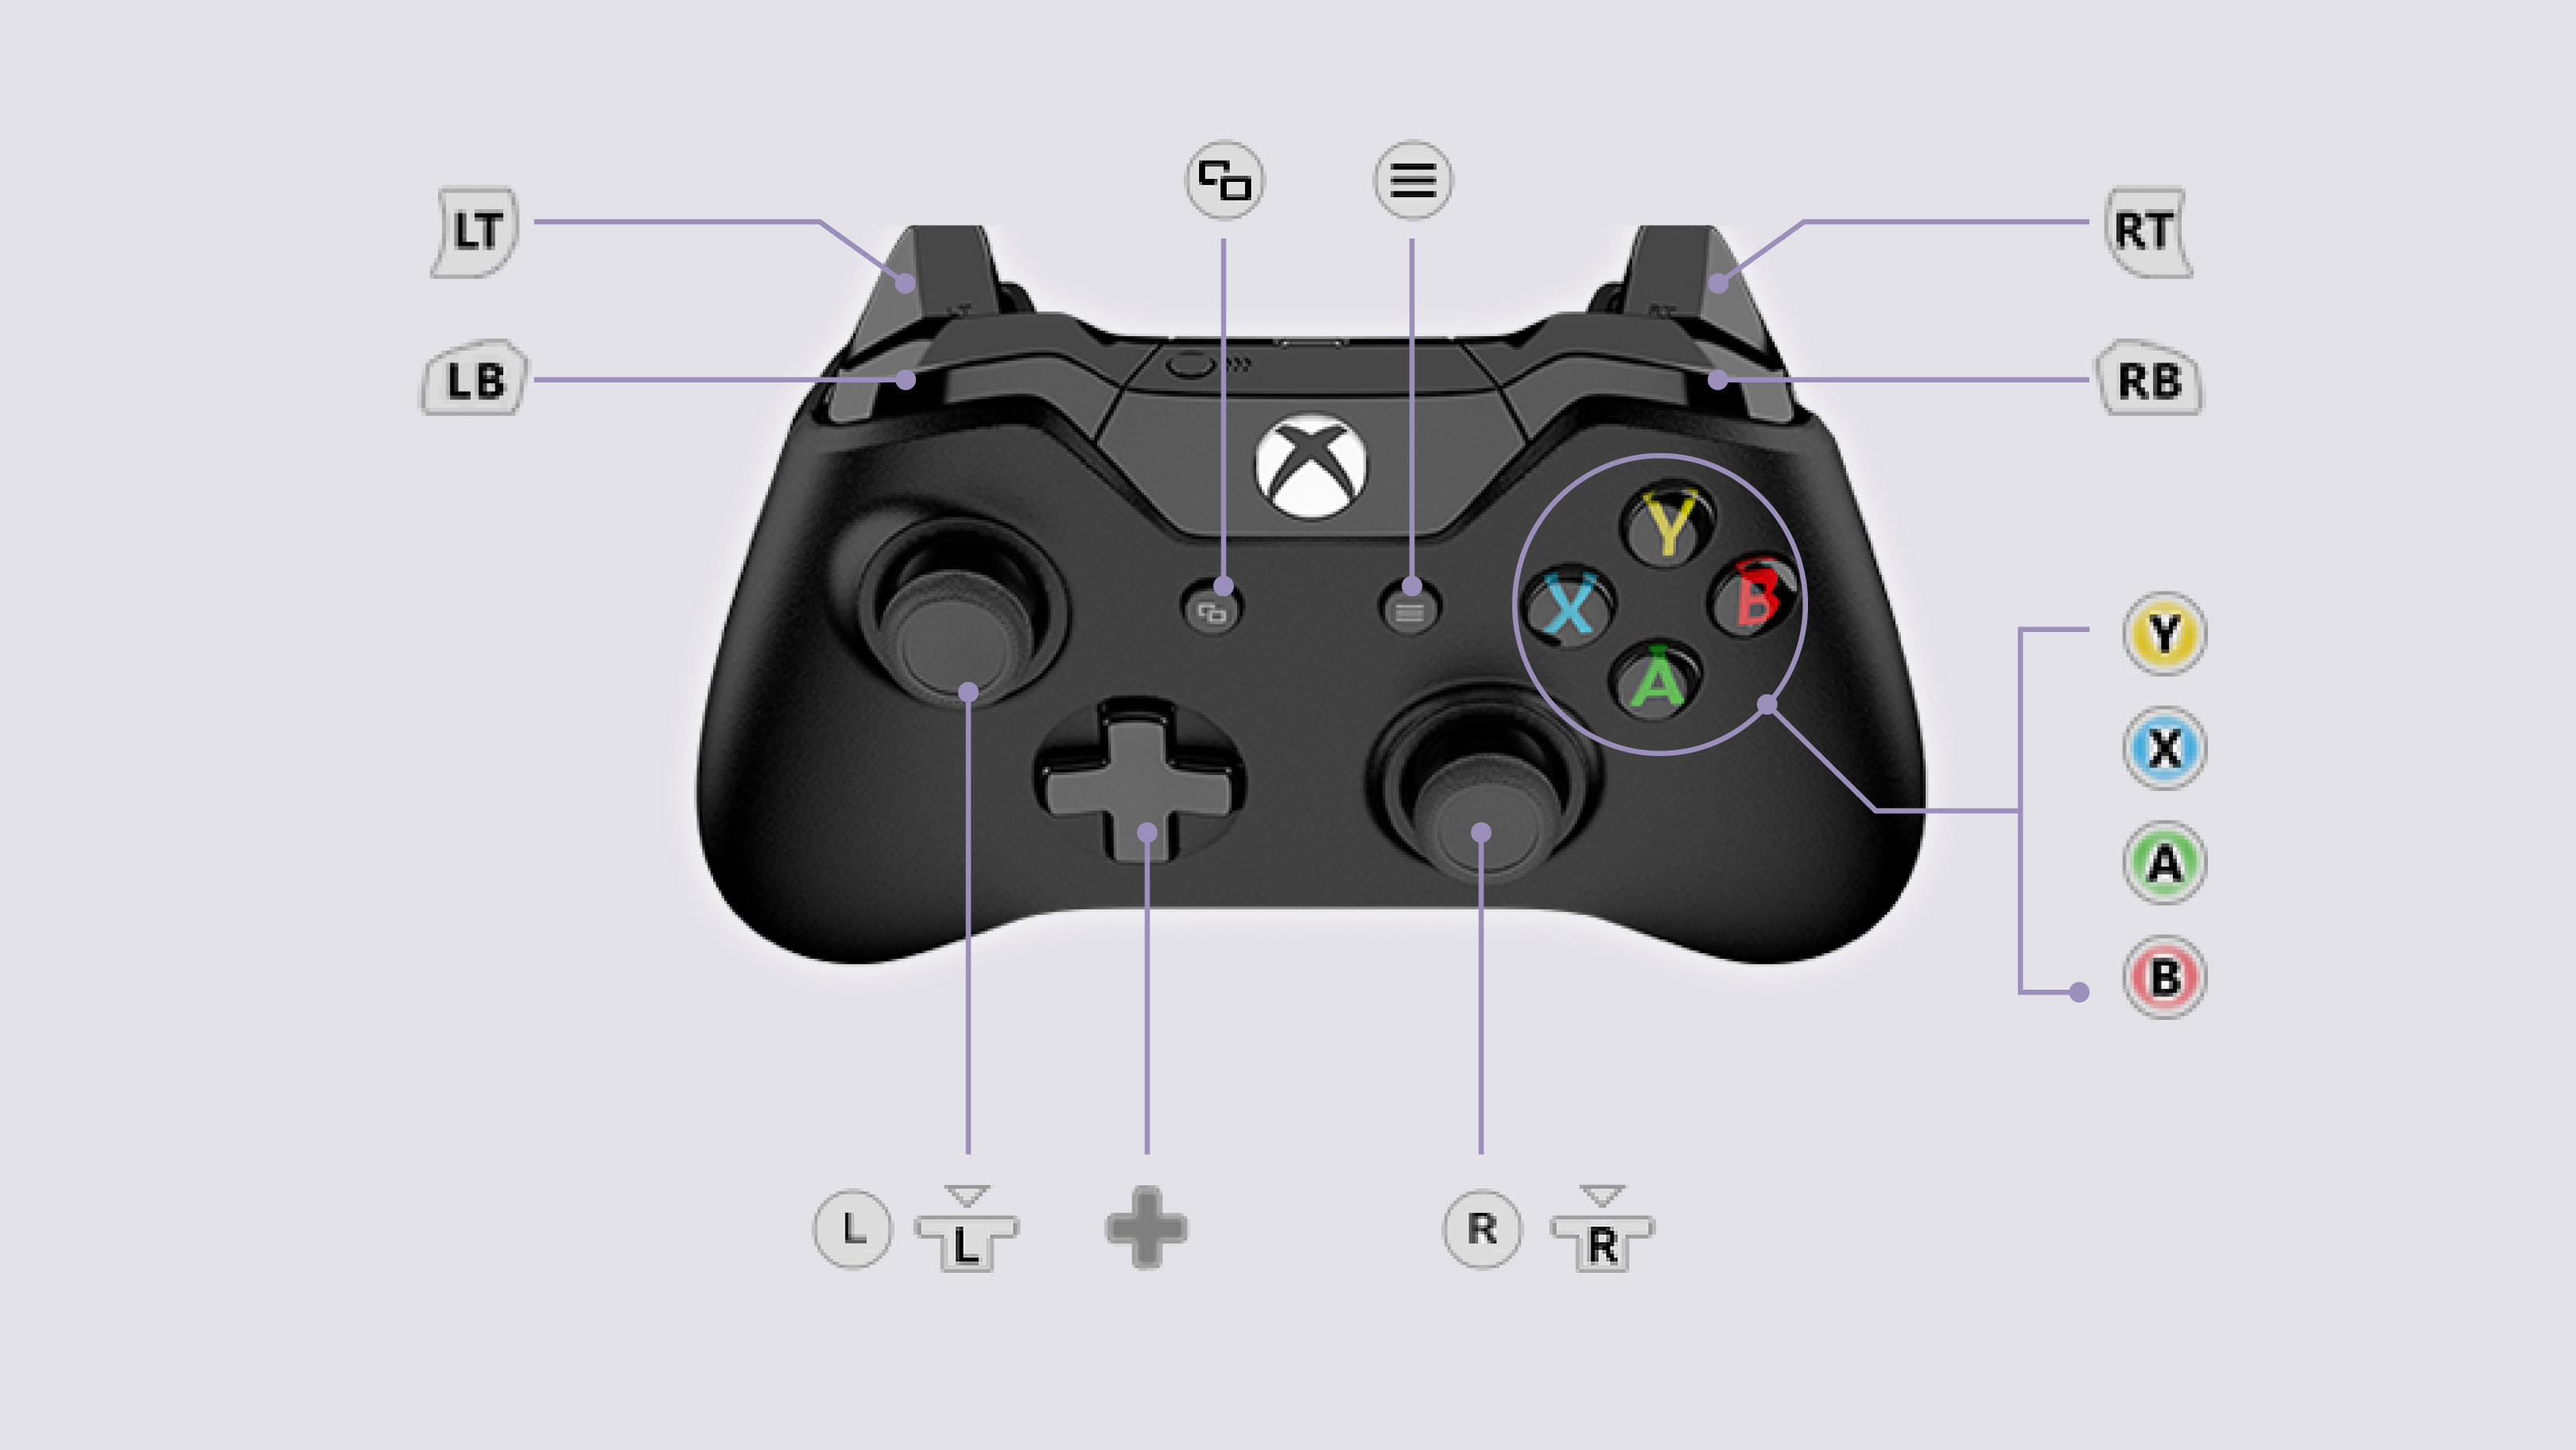 Кнопка r3 на джойстике. RT + L джойстик Xbox. Xbox Gamepad scheme. Геймпад Logitech схема геймпада. Ps4 Gamepad schematic.